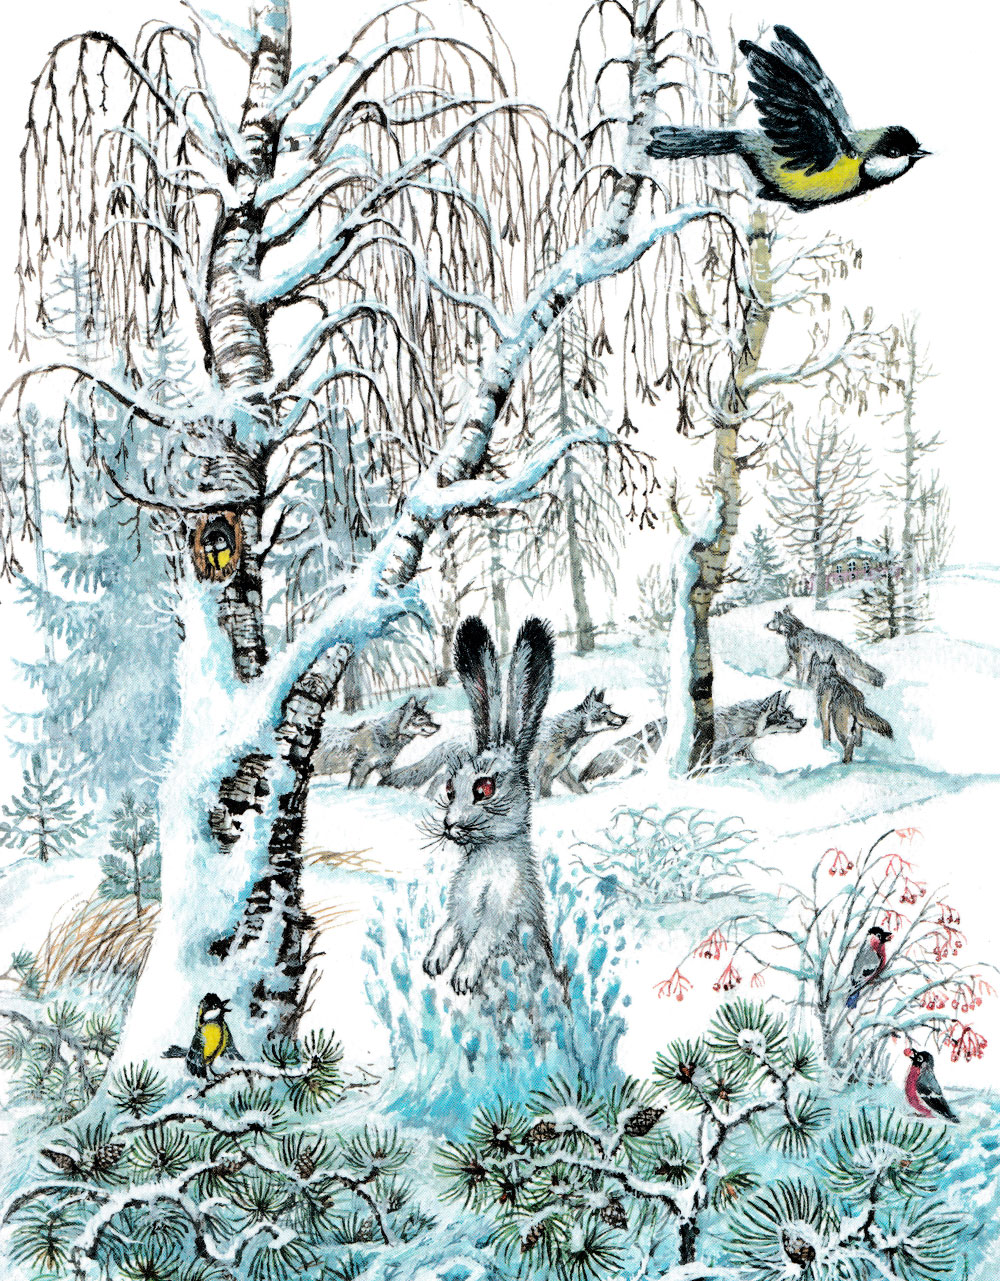 Заяц в зимнем лесу